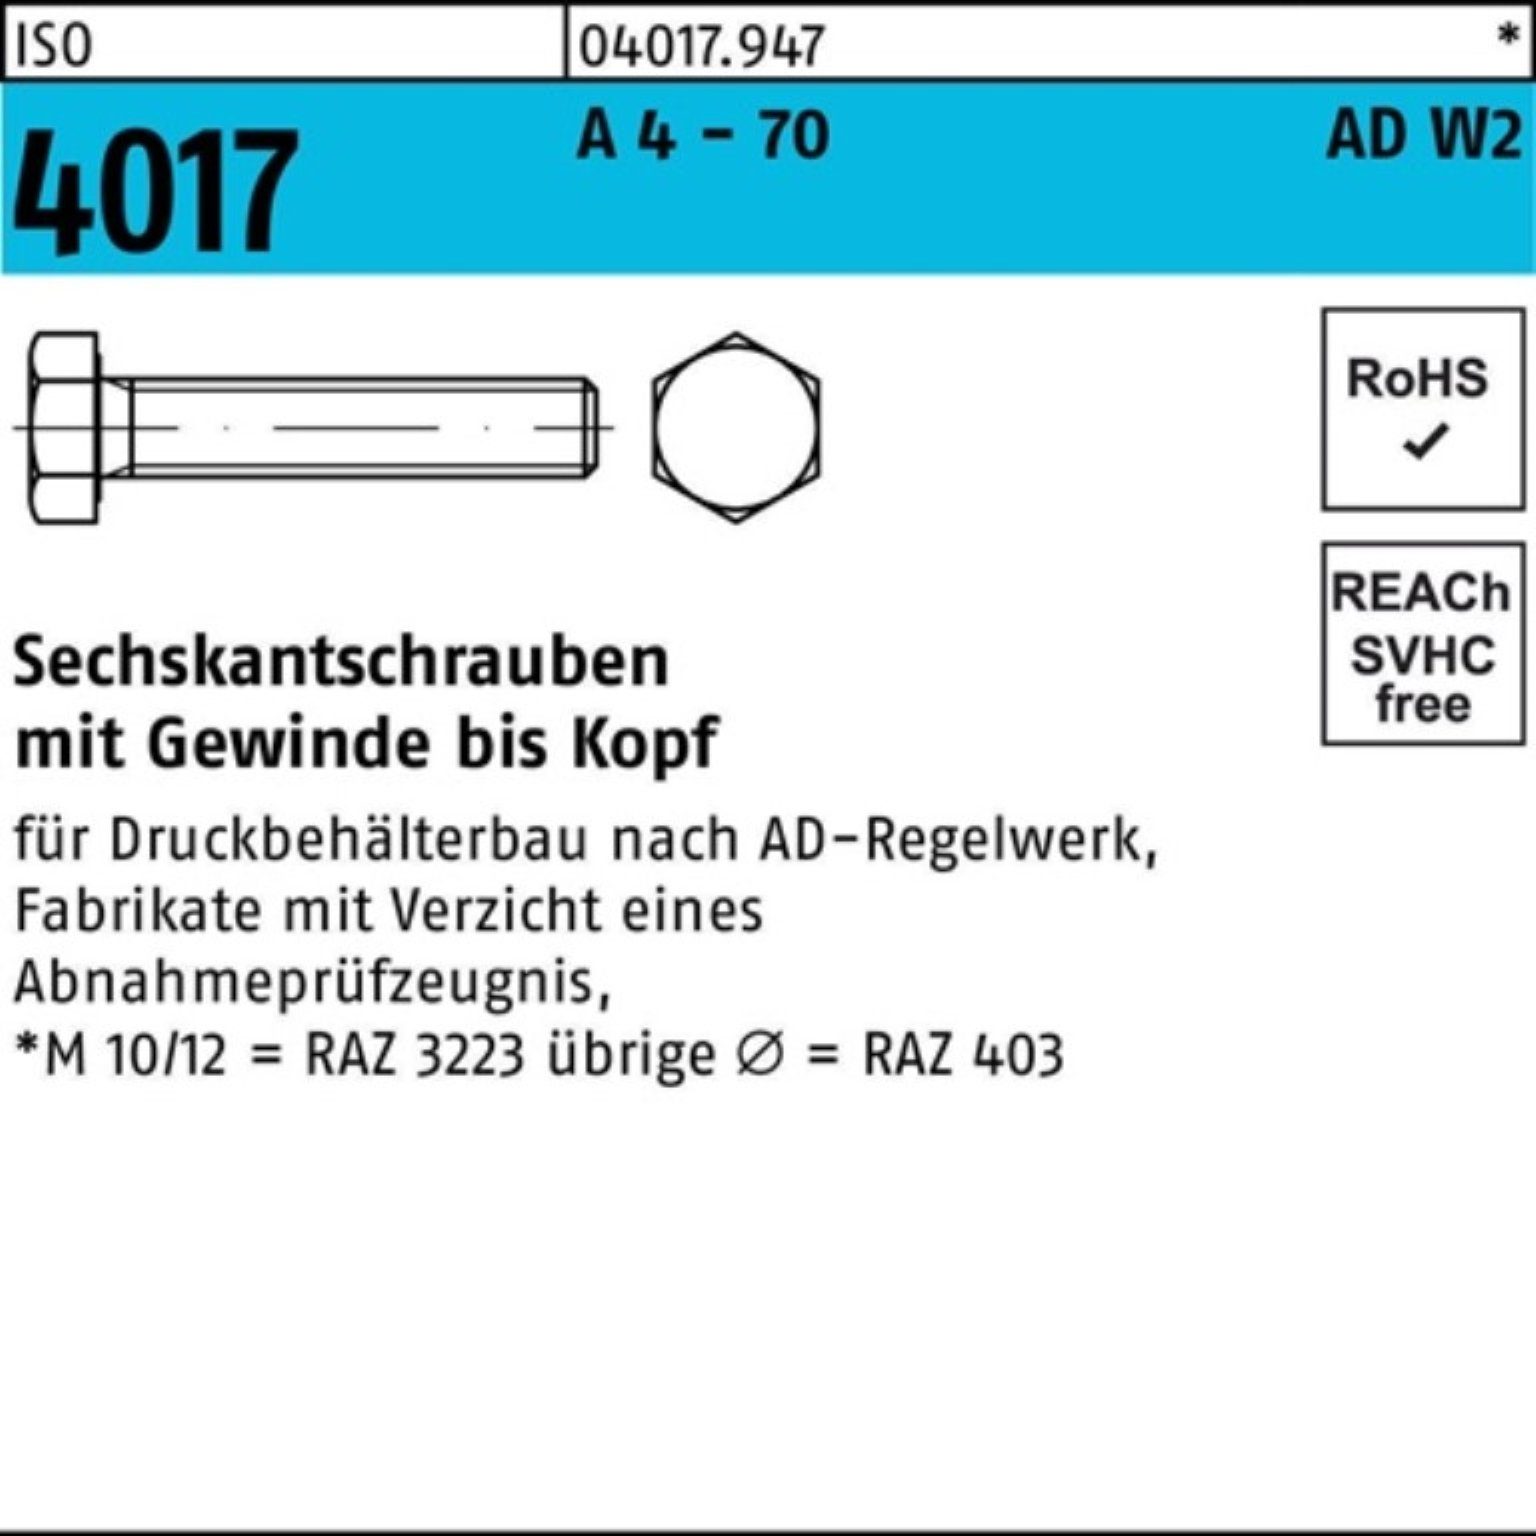 Bufab Sechskantschraube 200er Pack Sechskantschraube ISO 4017 VG M8x 35 A 4 - 70 AD-W2 200 St